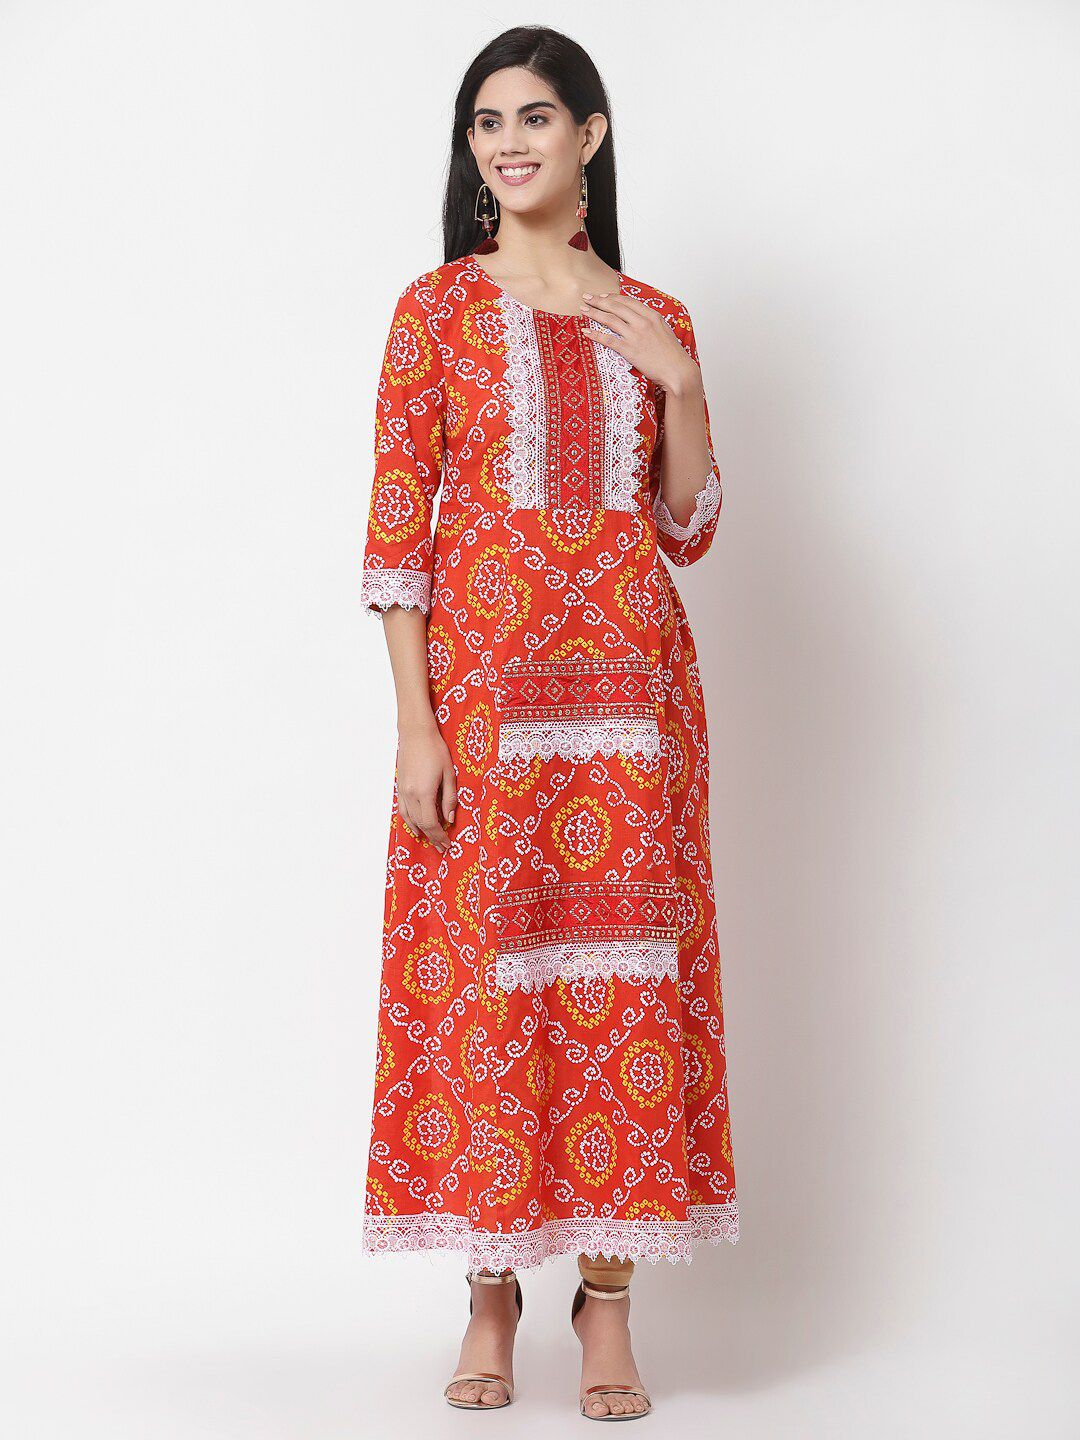 Myshka Red & Yellow Ethnic Motifs Cotton Ethnic Maxi Dress Price in India